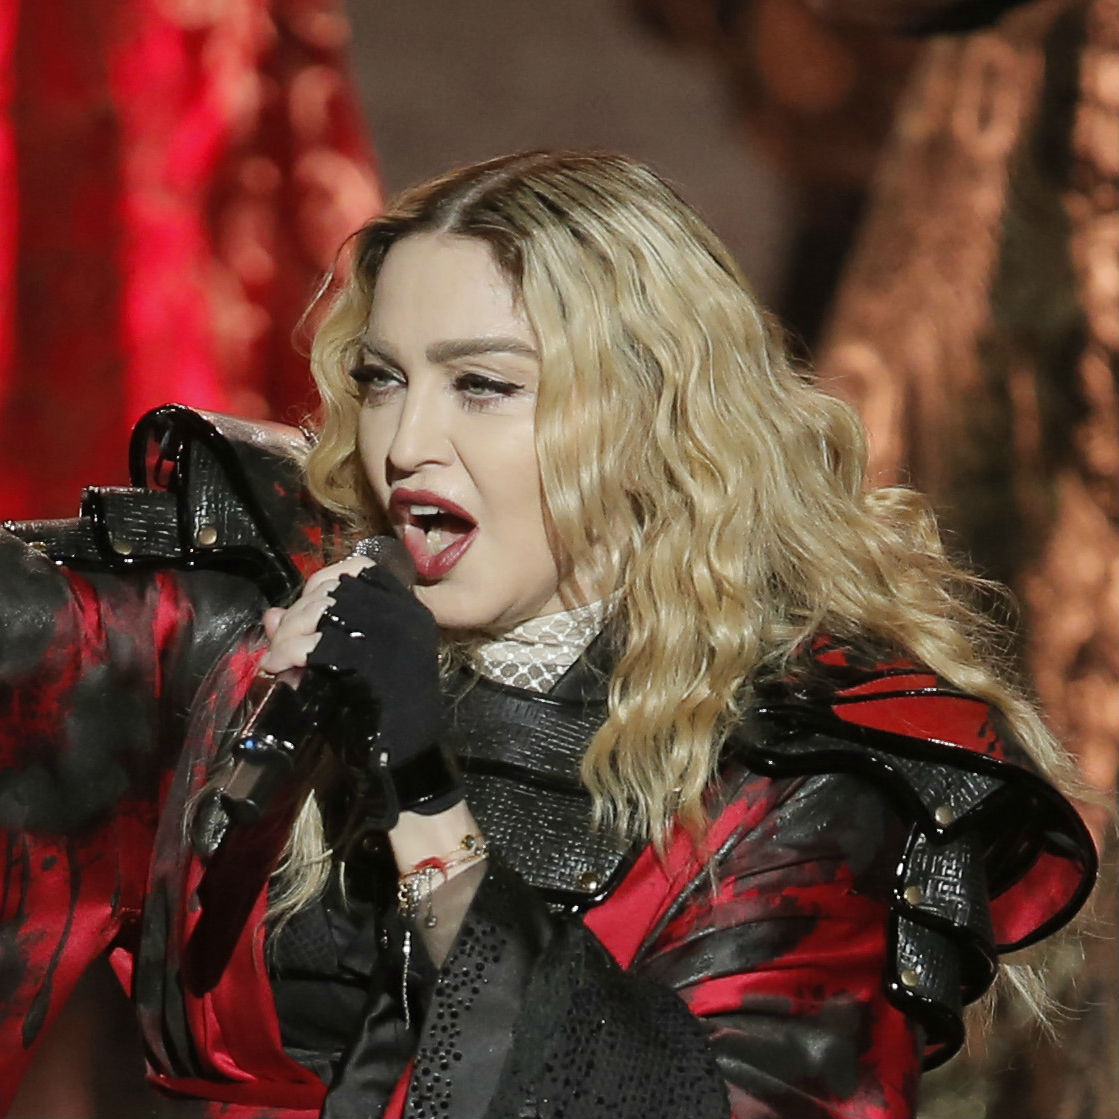 Philippine archbishop urges Catholics to boycott Madonna concert